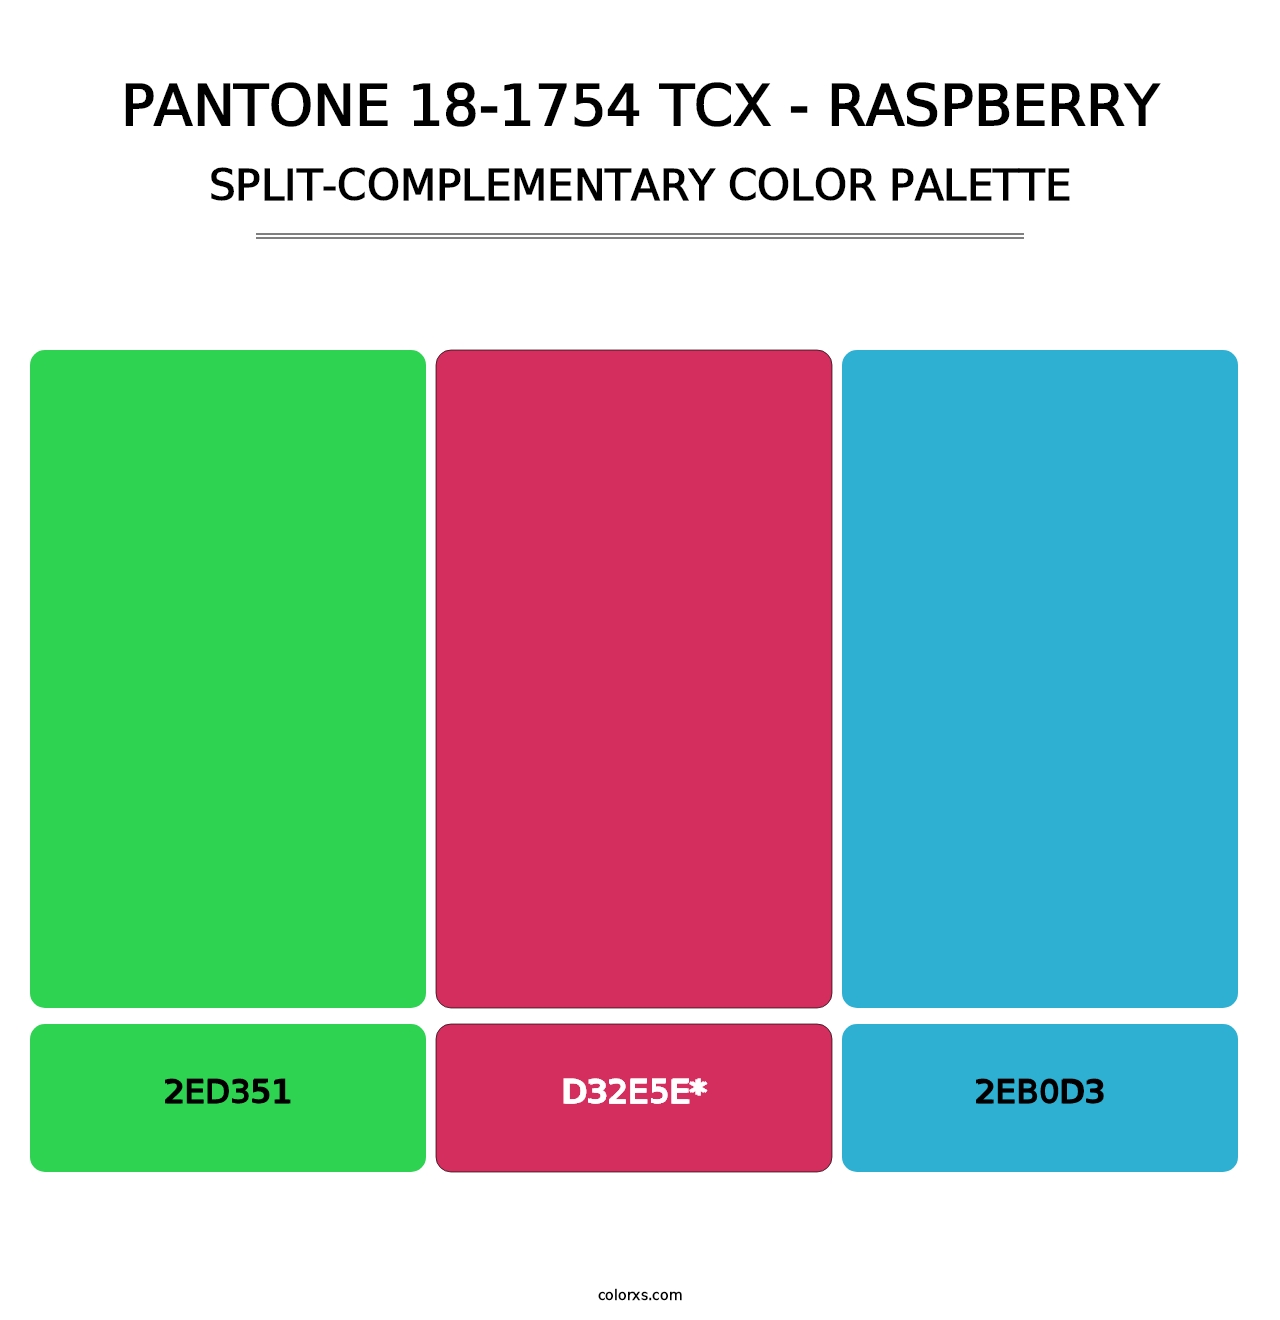 PANTONE 18-1754 TCX - Raspberry - Split-Complementary Color Palette